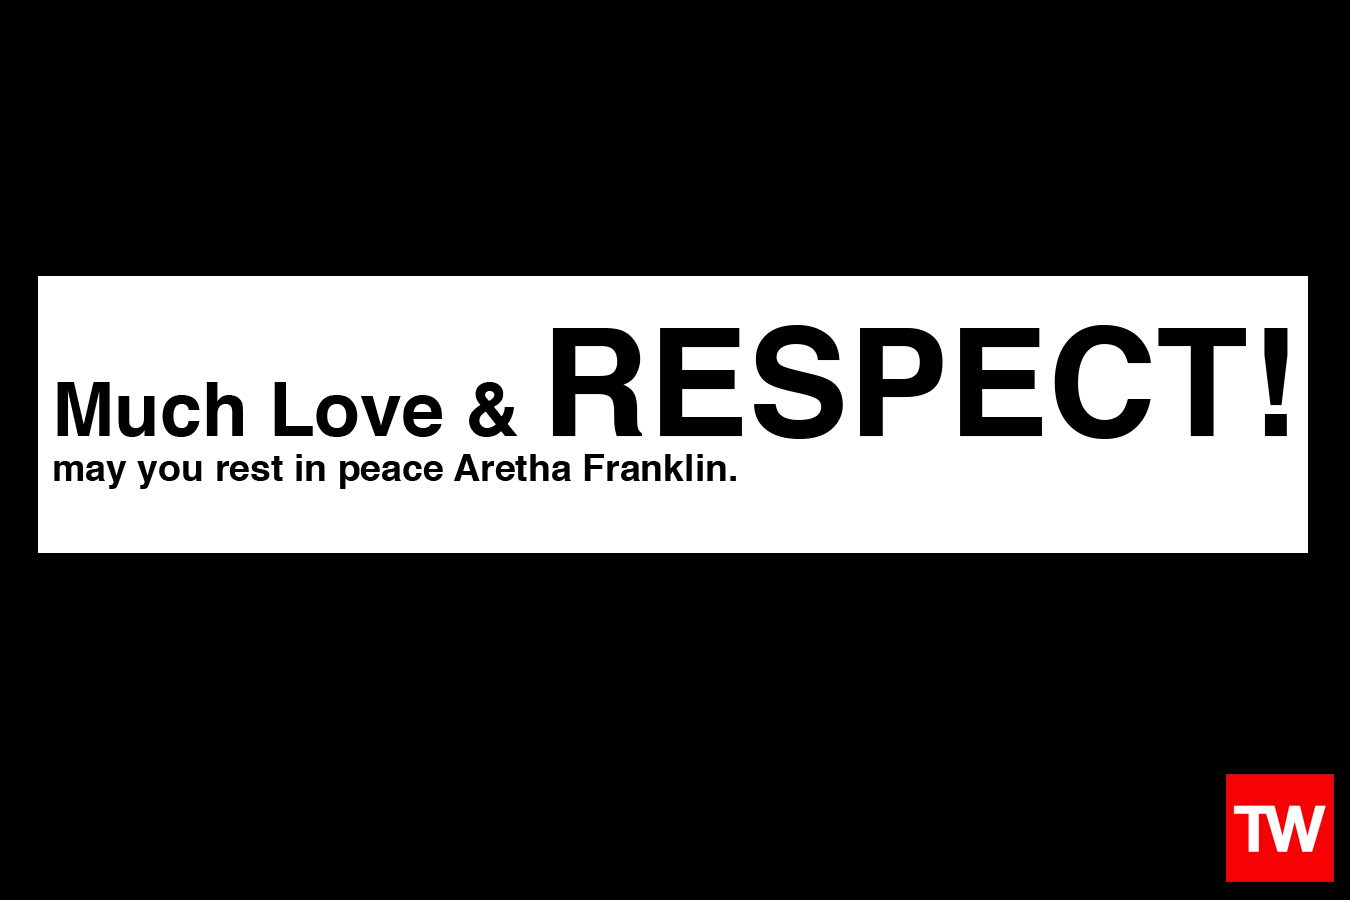 R.I.P. Aretha Franklin